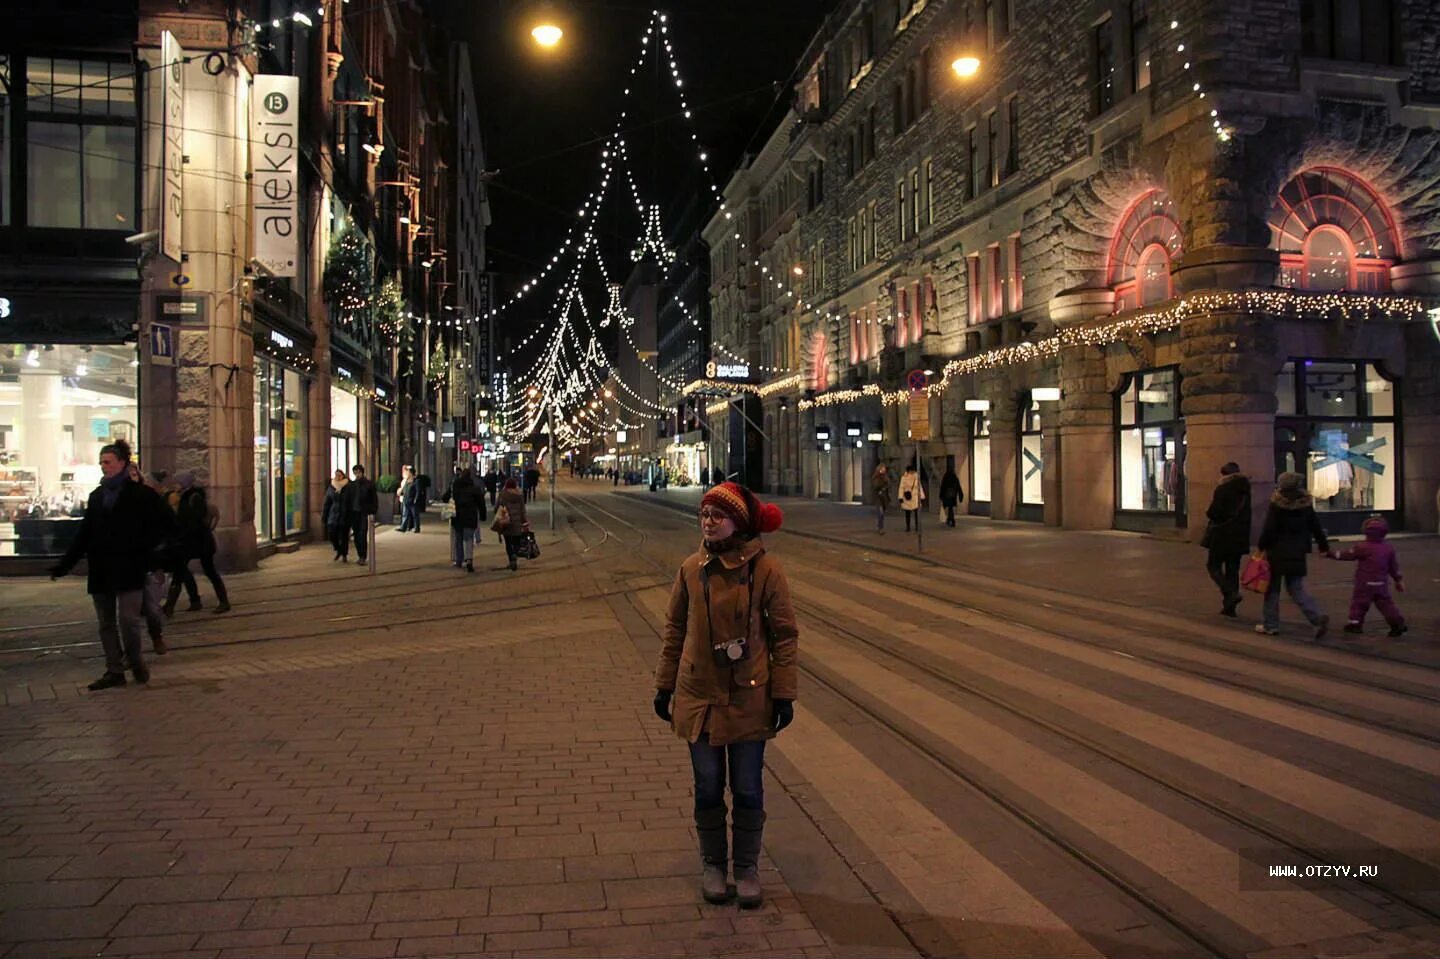 Хельсинки температура. Хельсинки зима. Хельсинки улицы. Улицы Хельсинки зимой. Финляндия Хельсинки зимой.